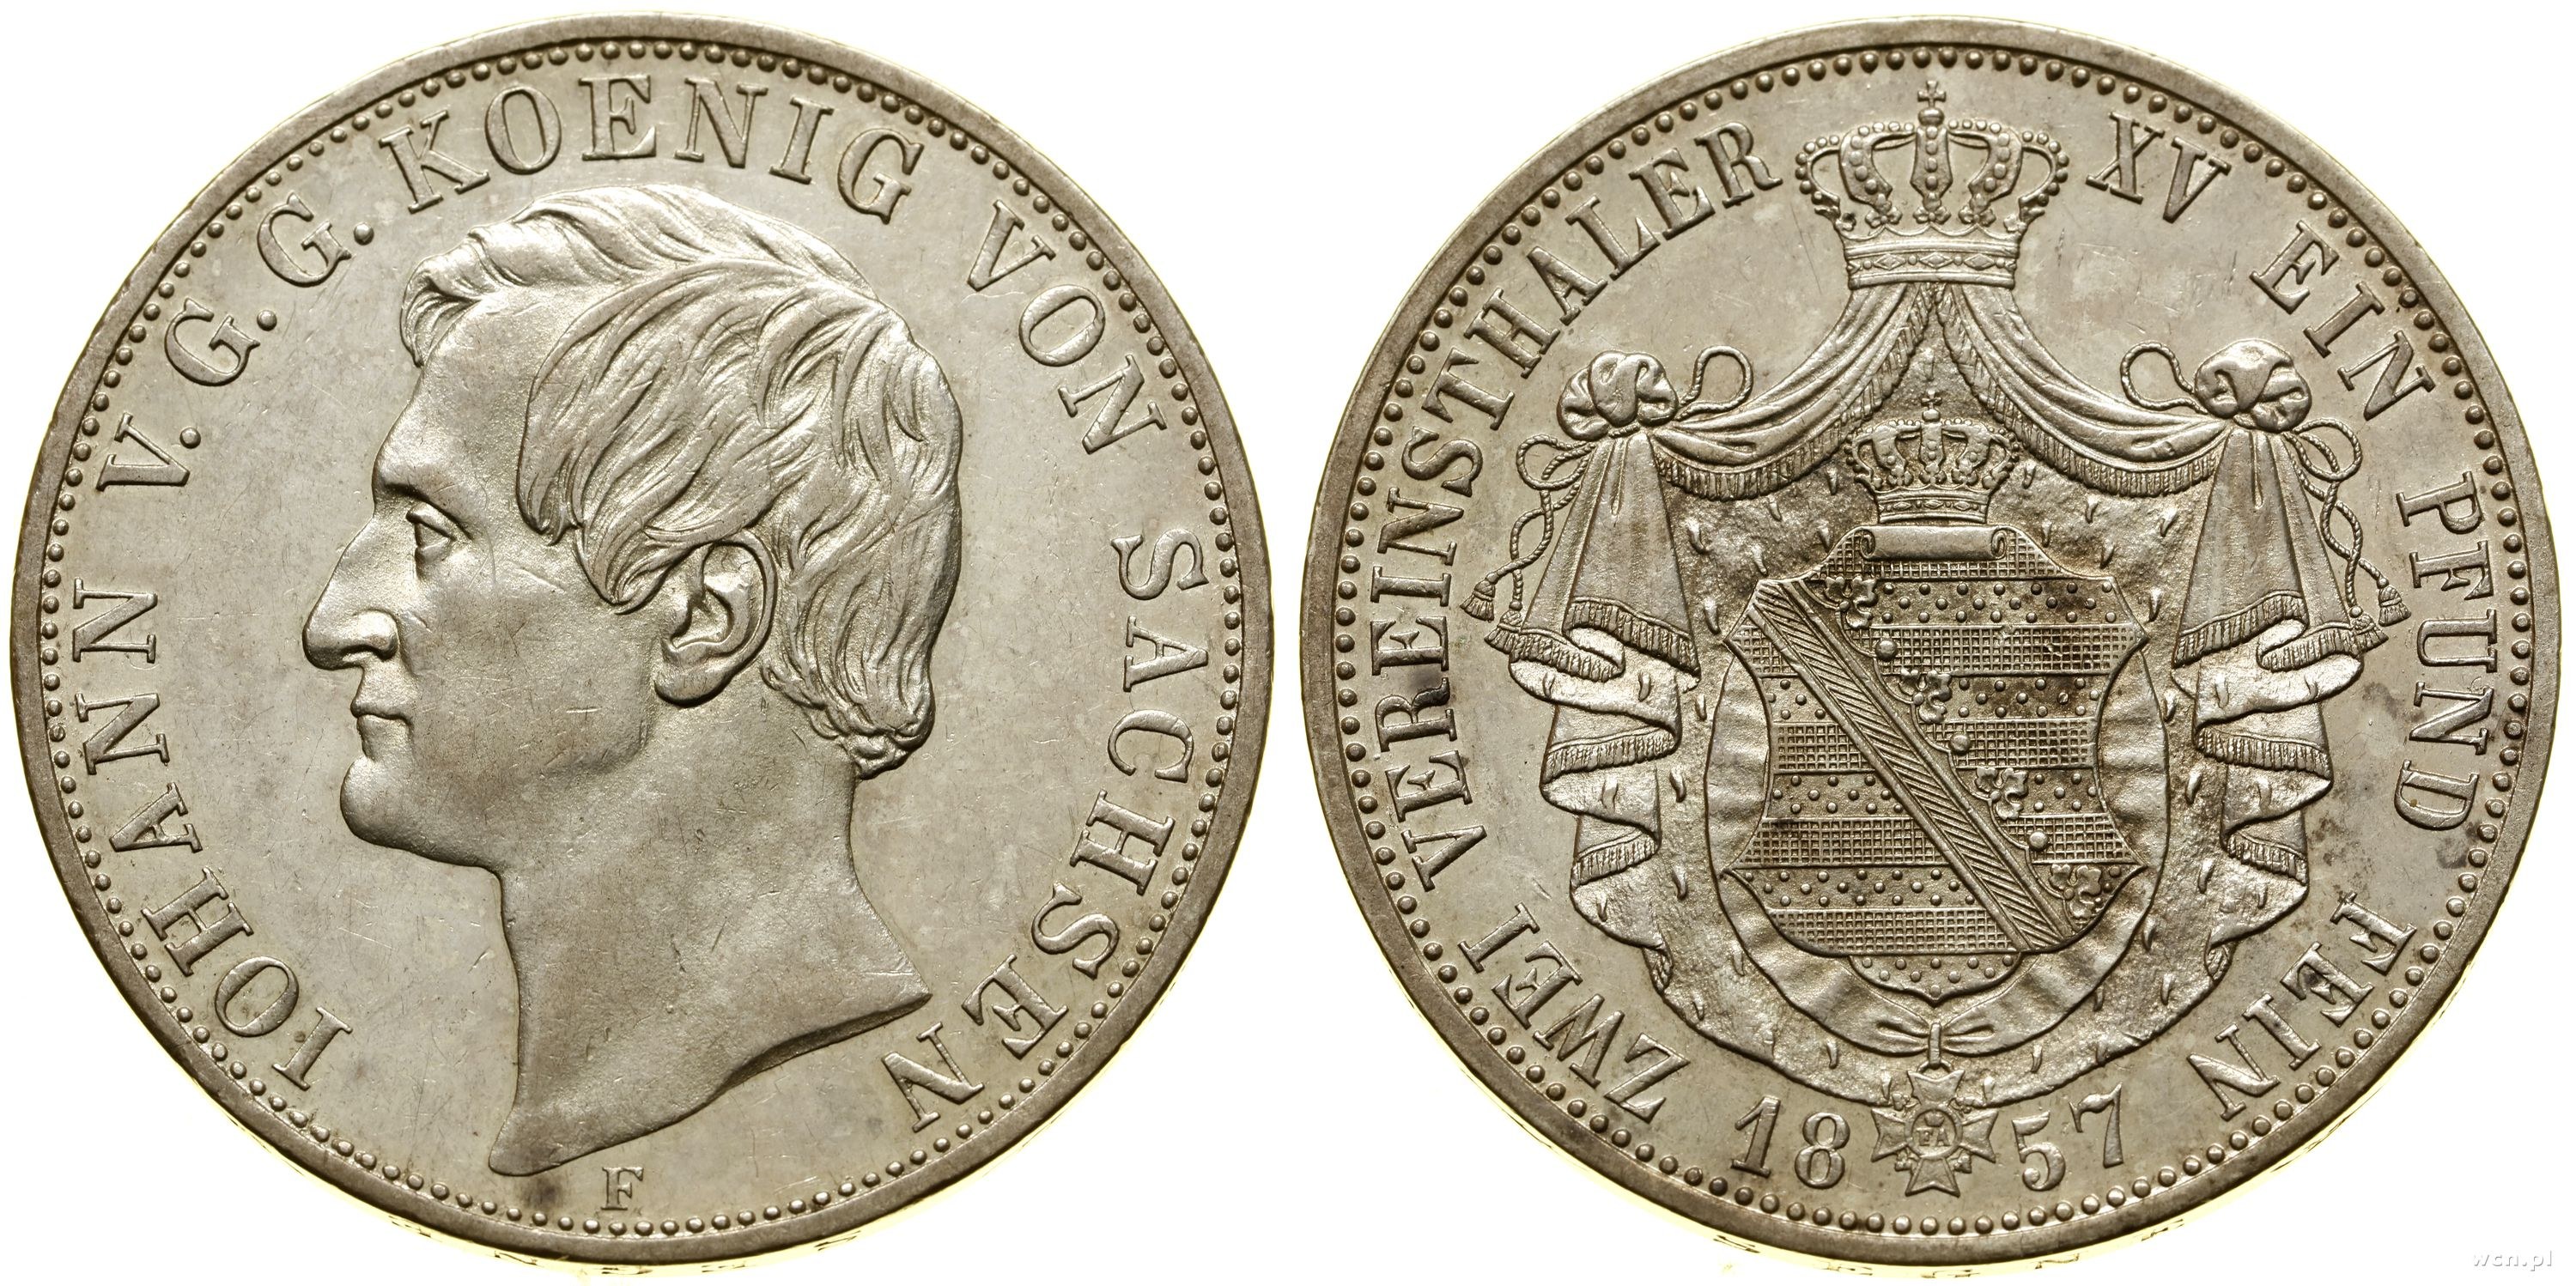 1956 год монеты цена. 20 Копеек 1943. 15 Копеек СССР 1961 года. Монета 20 копеек 1943 a112203. Монета 15 копеек 1953 a021926.